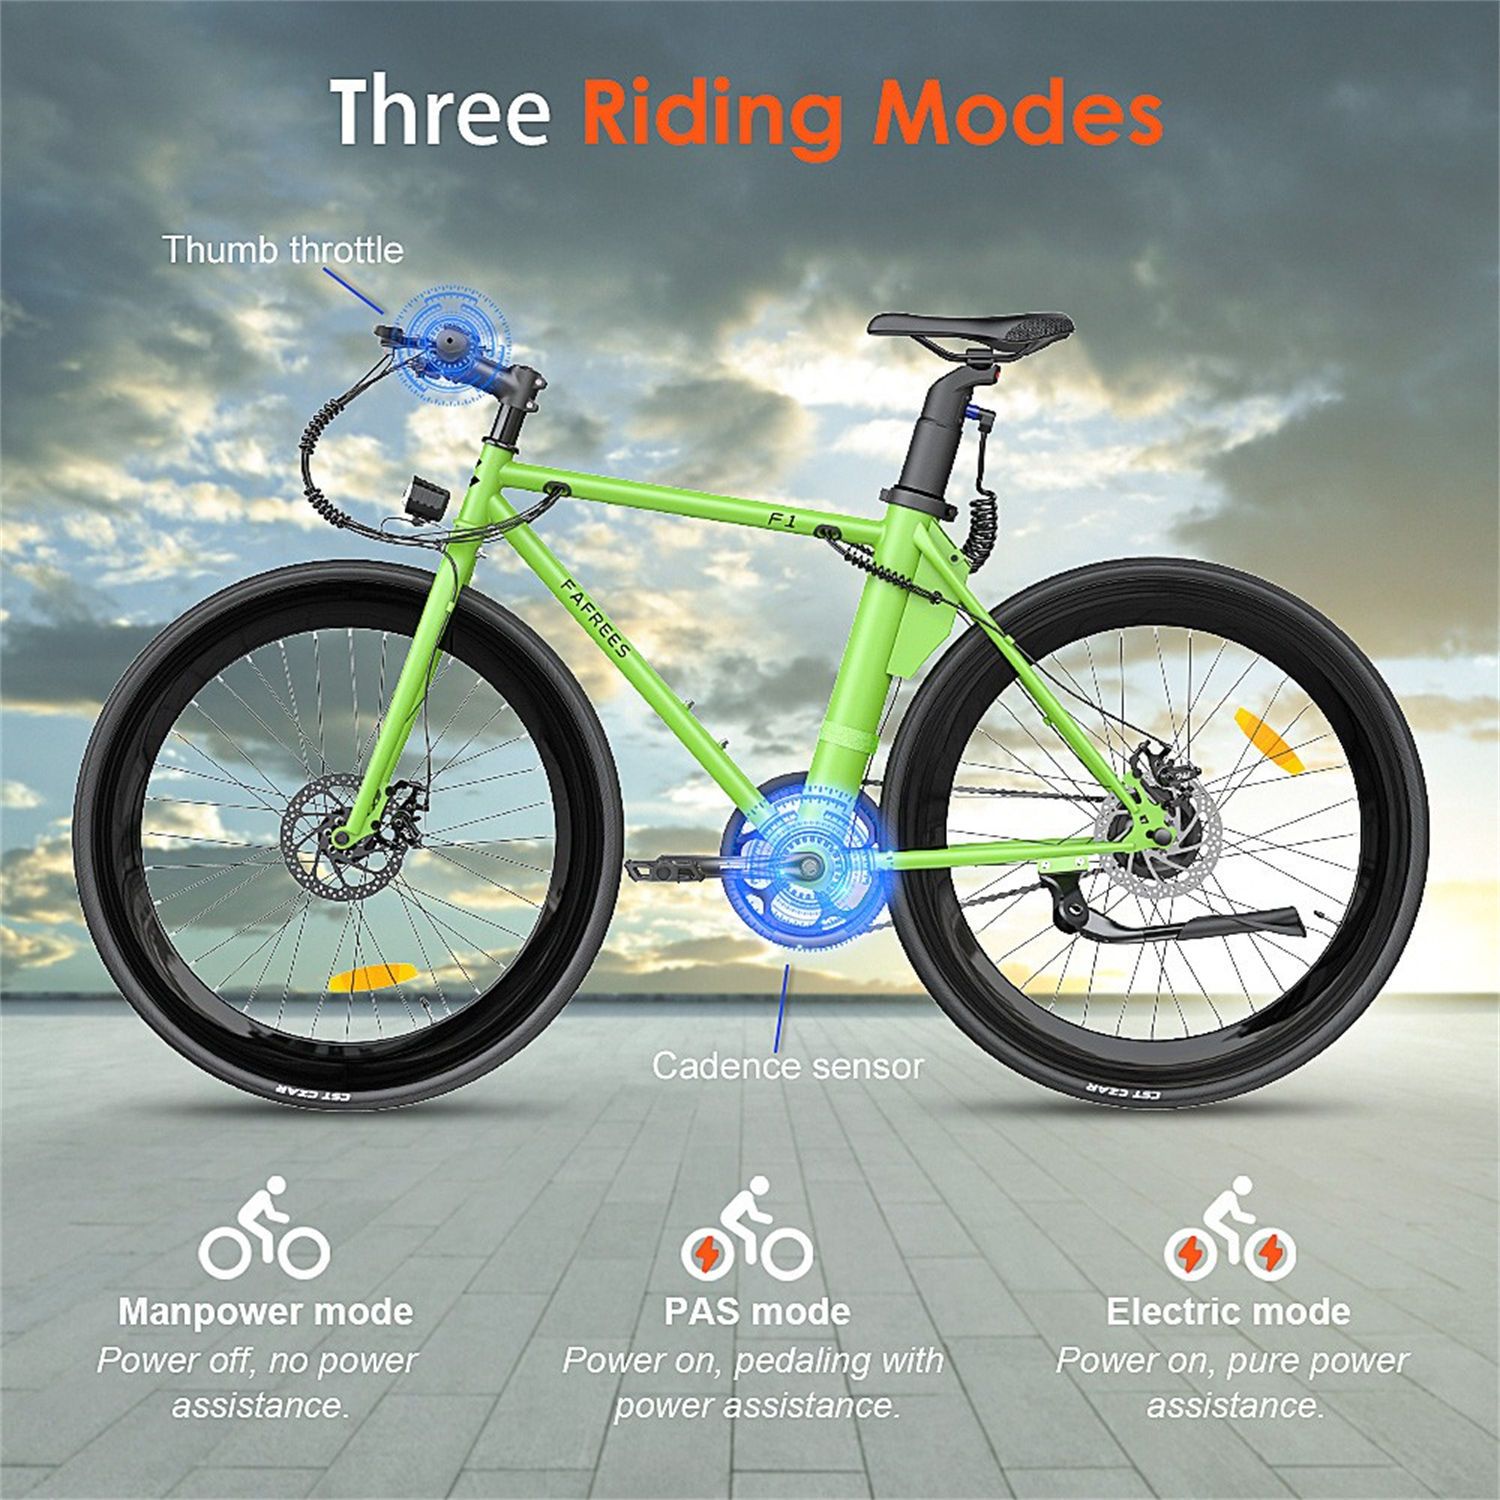 3 Riding Modes